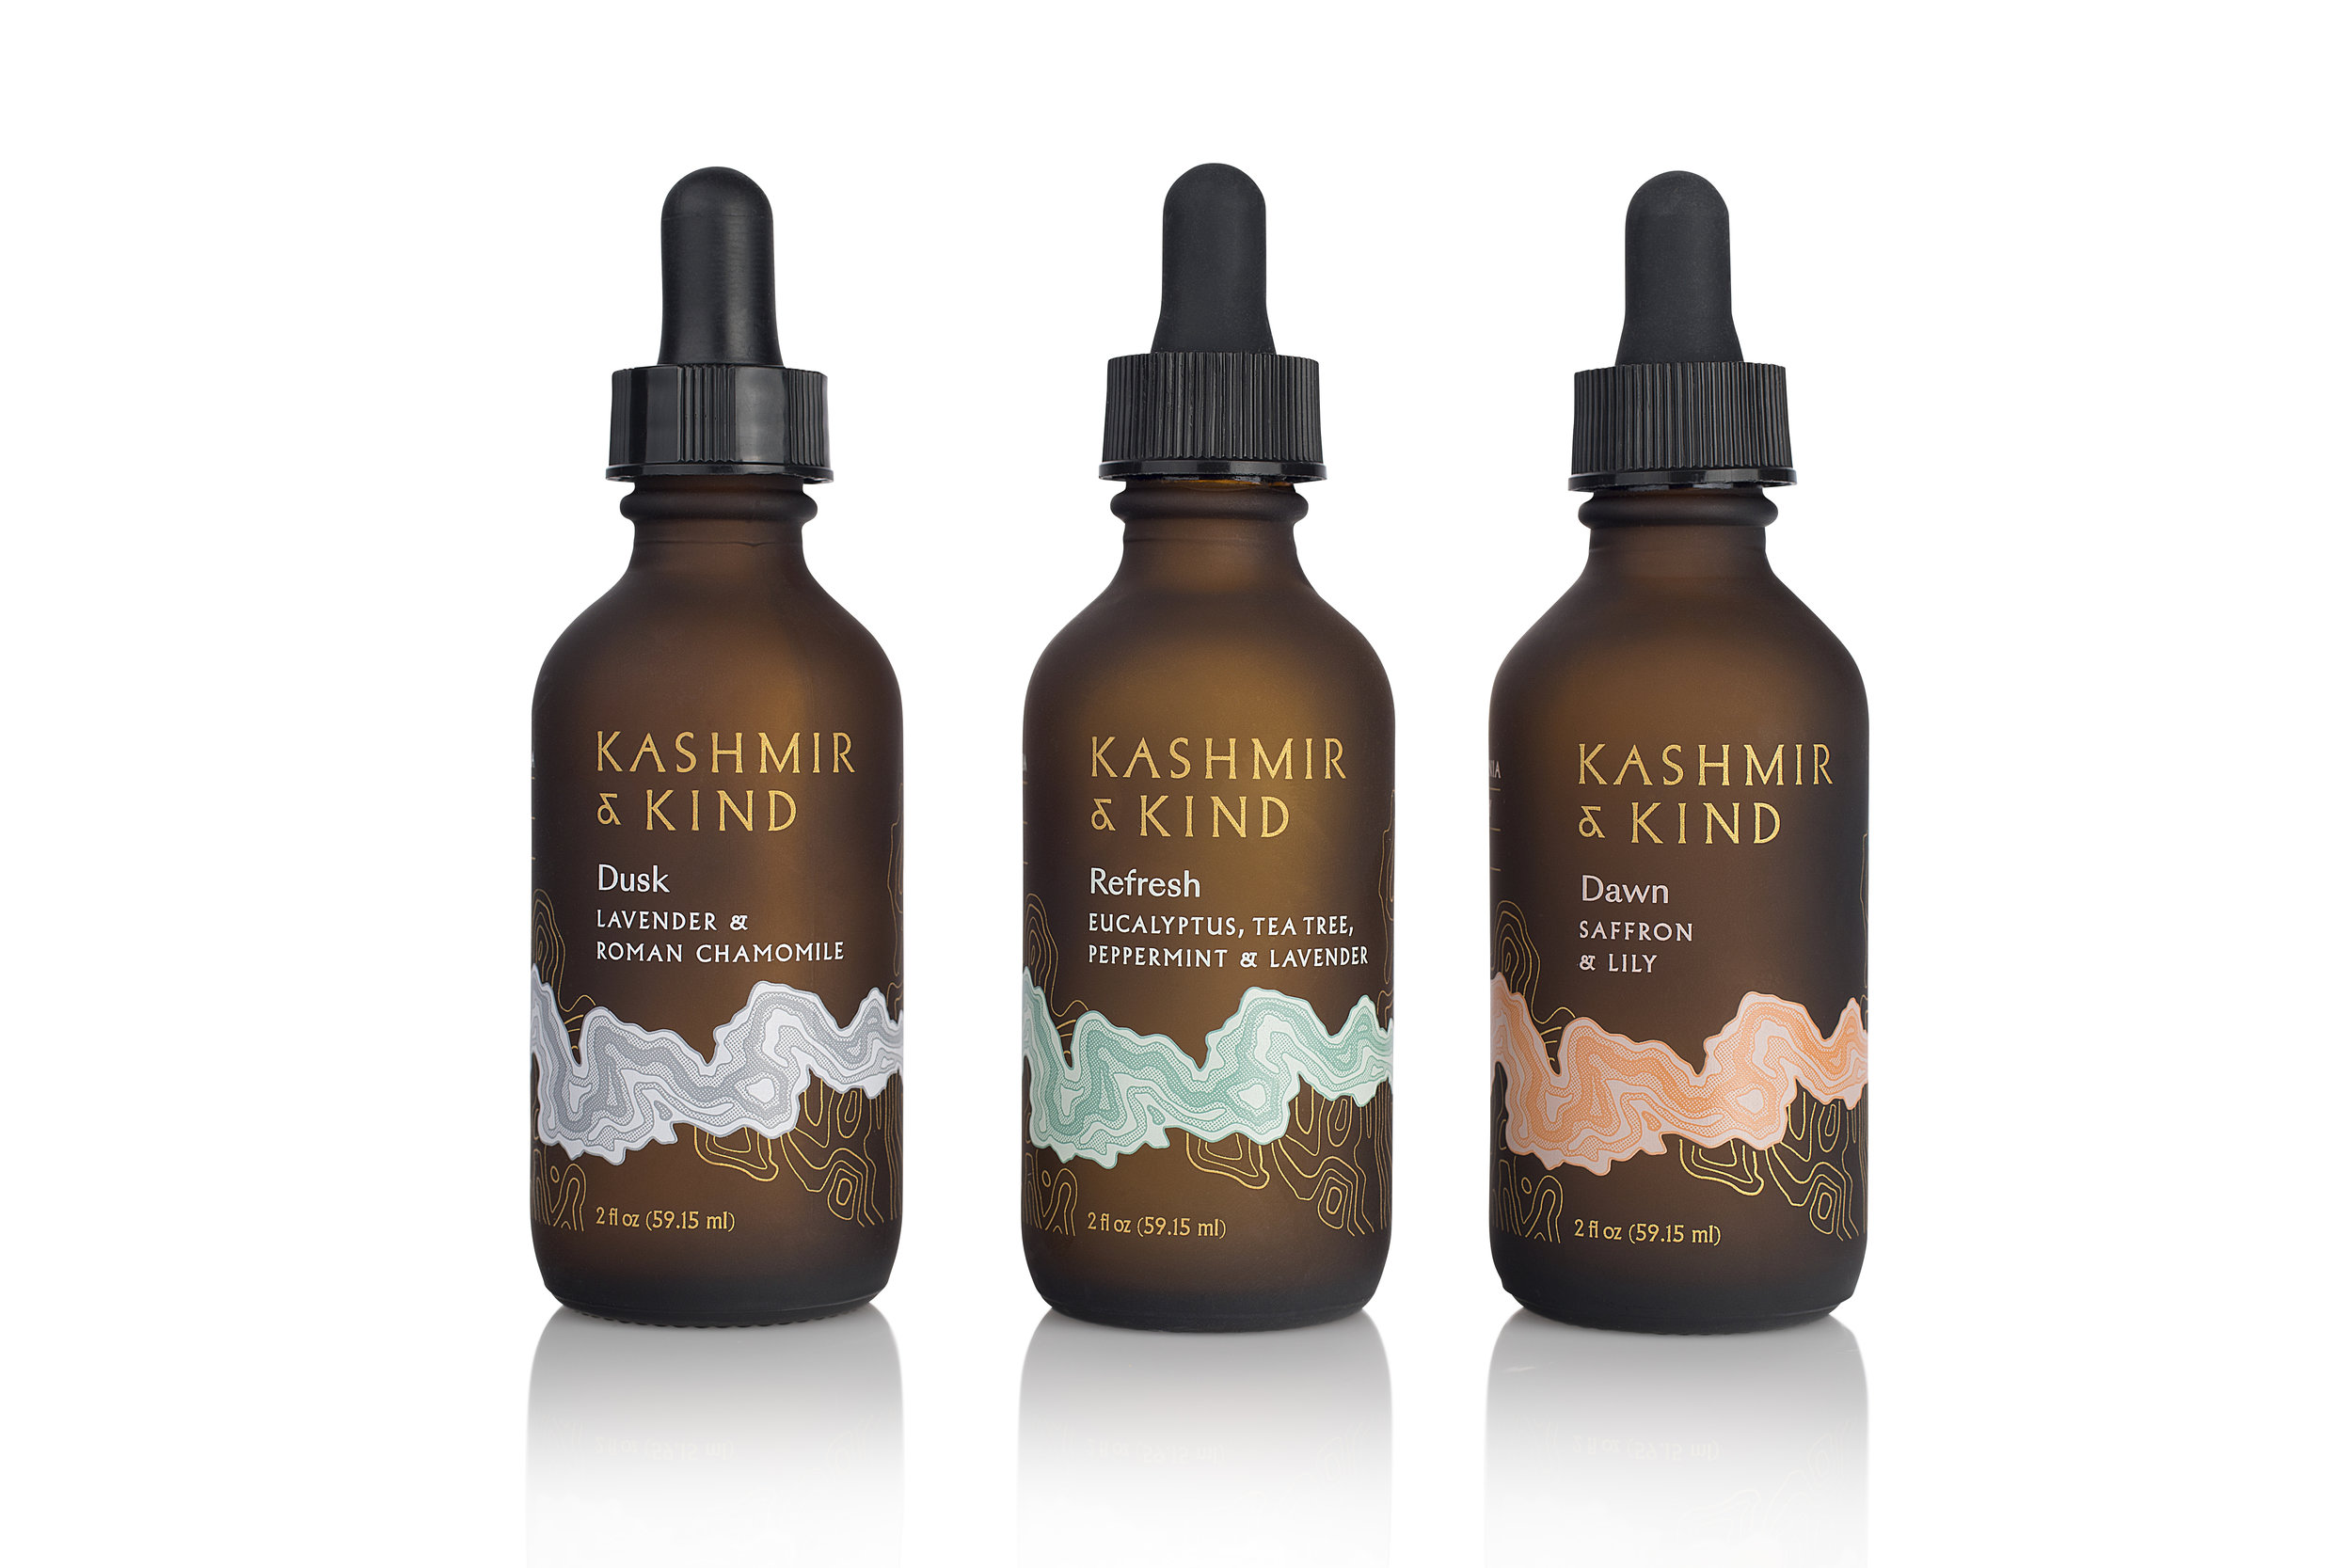 Kashmir & Kind natural, low THC body oils